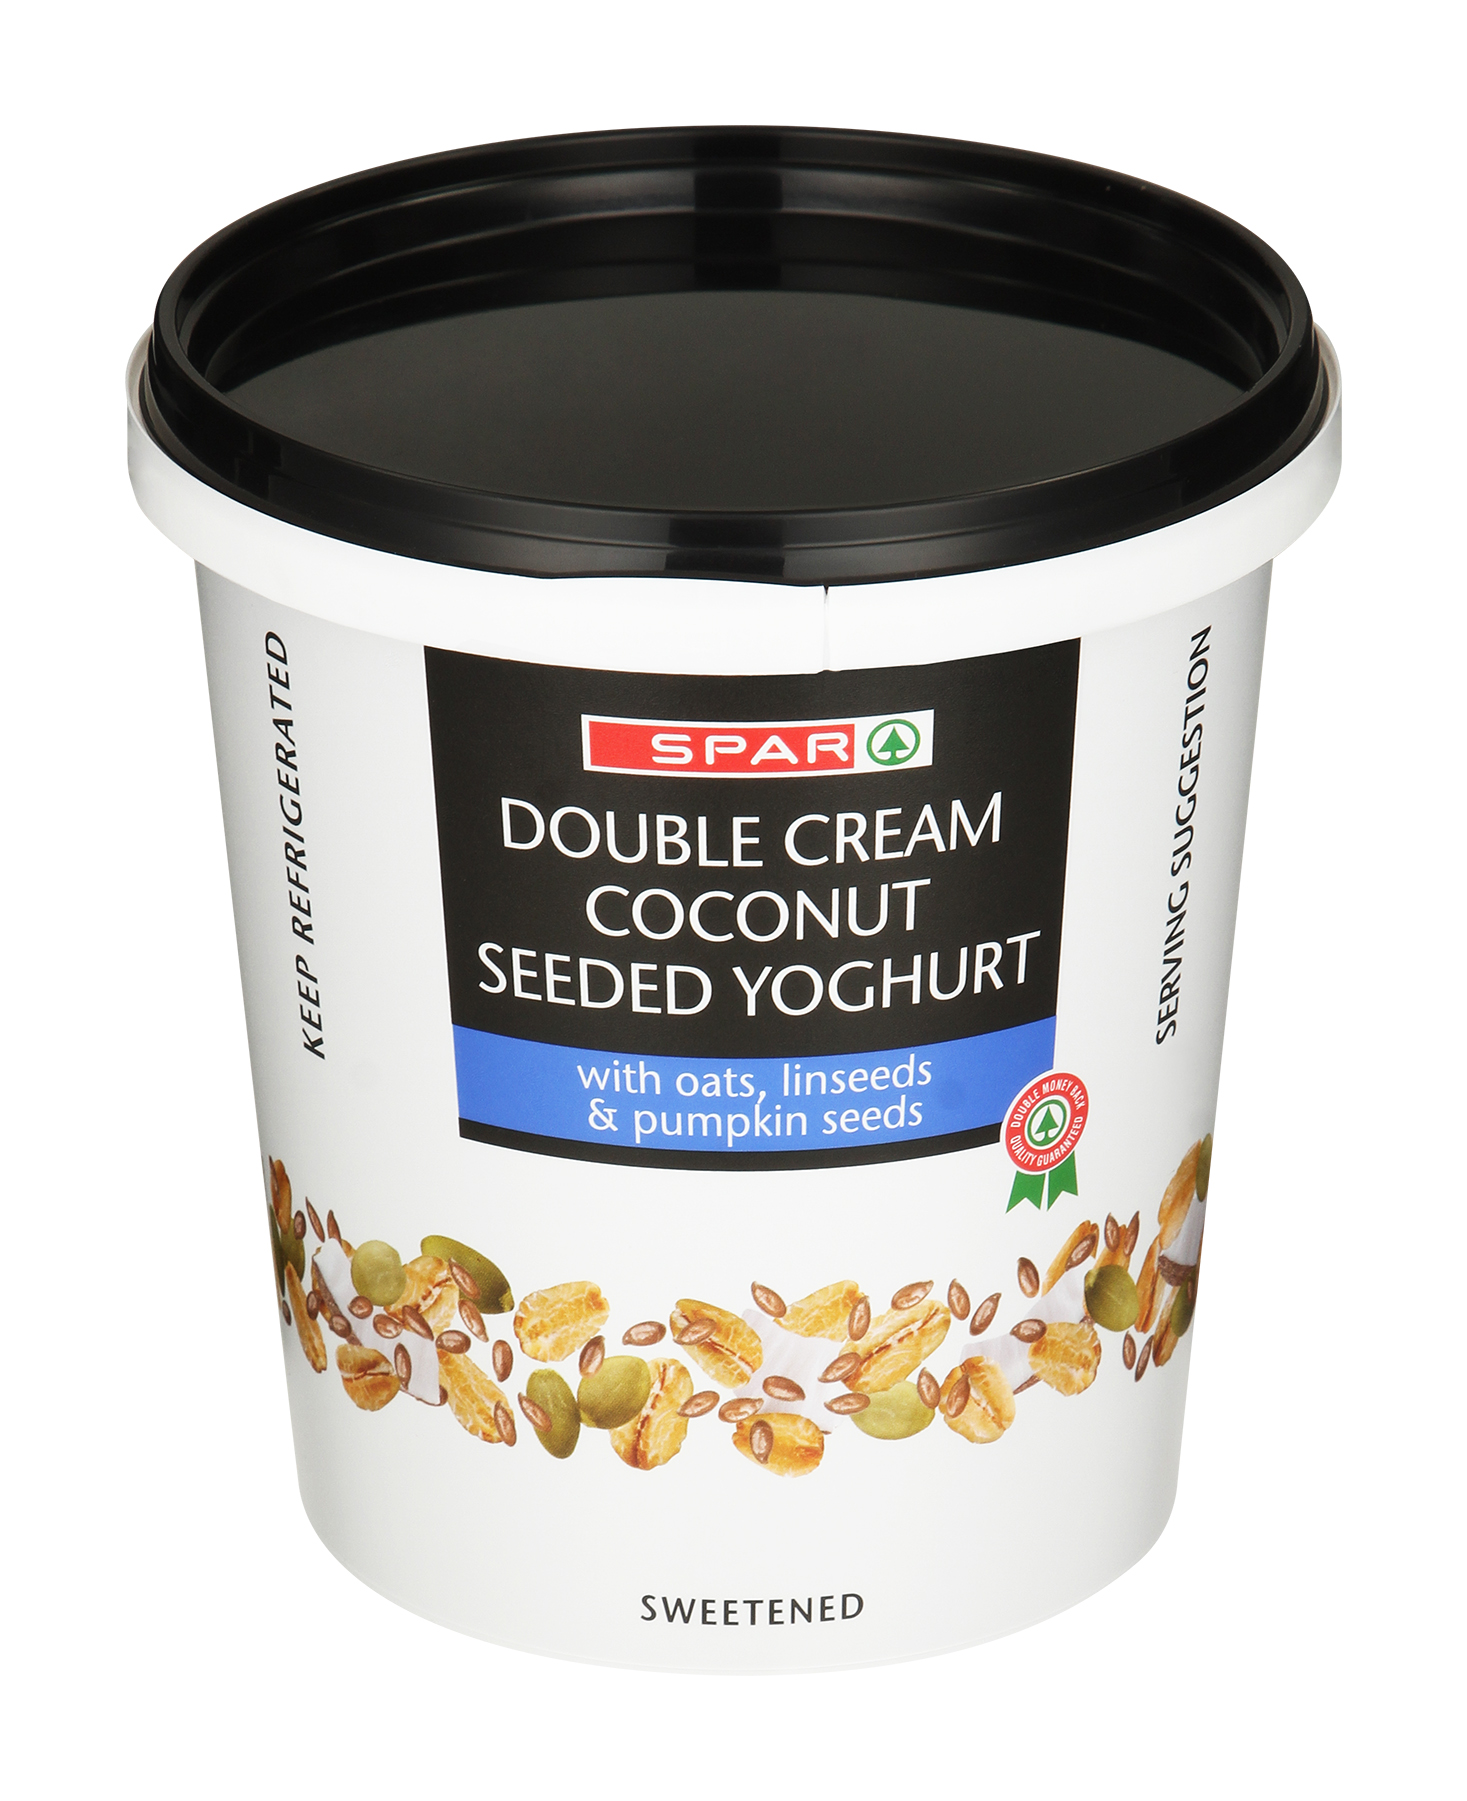 double cream - coconut seeded yoghurt